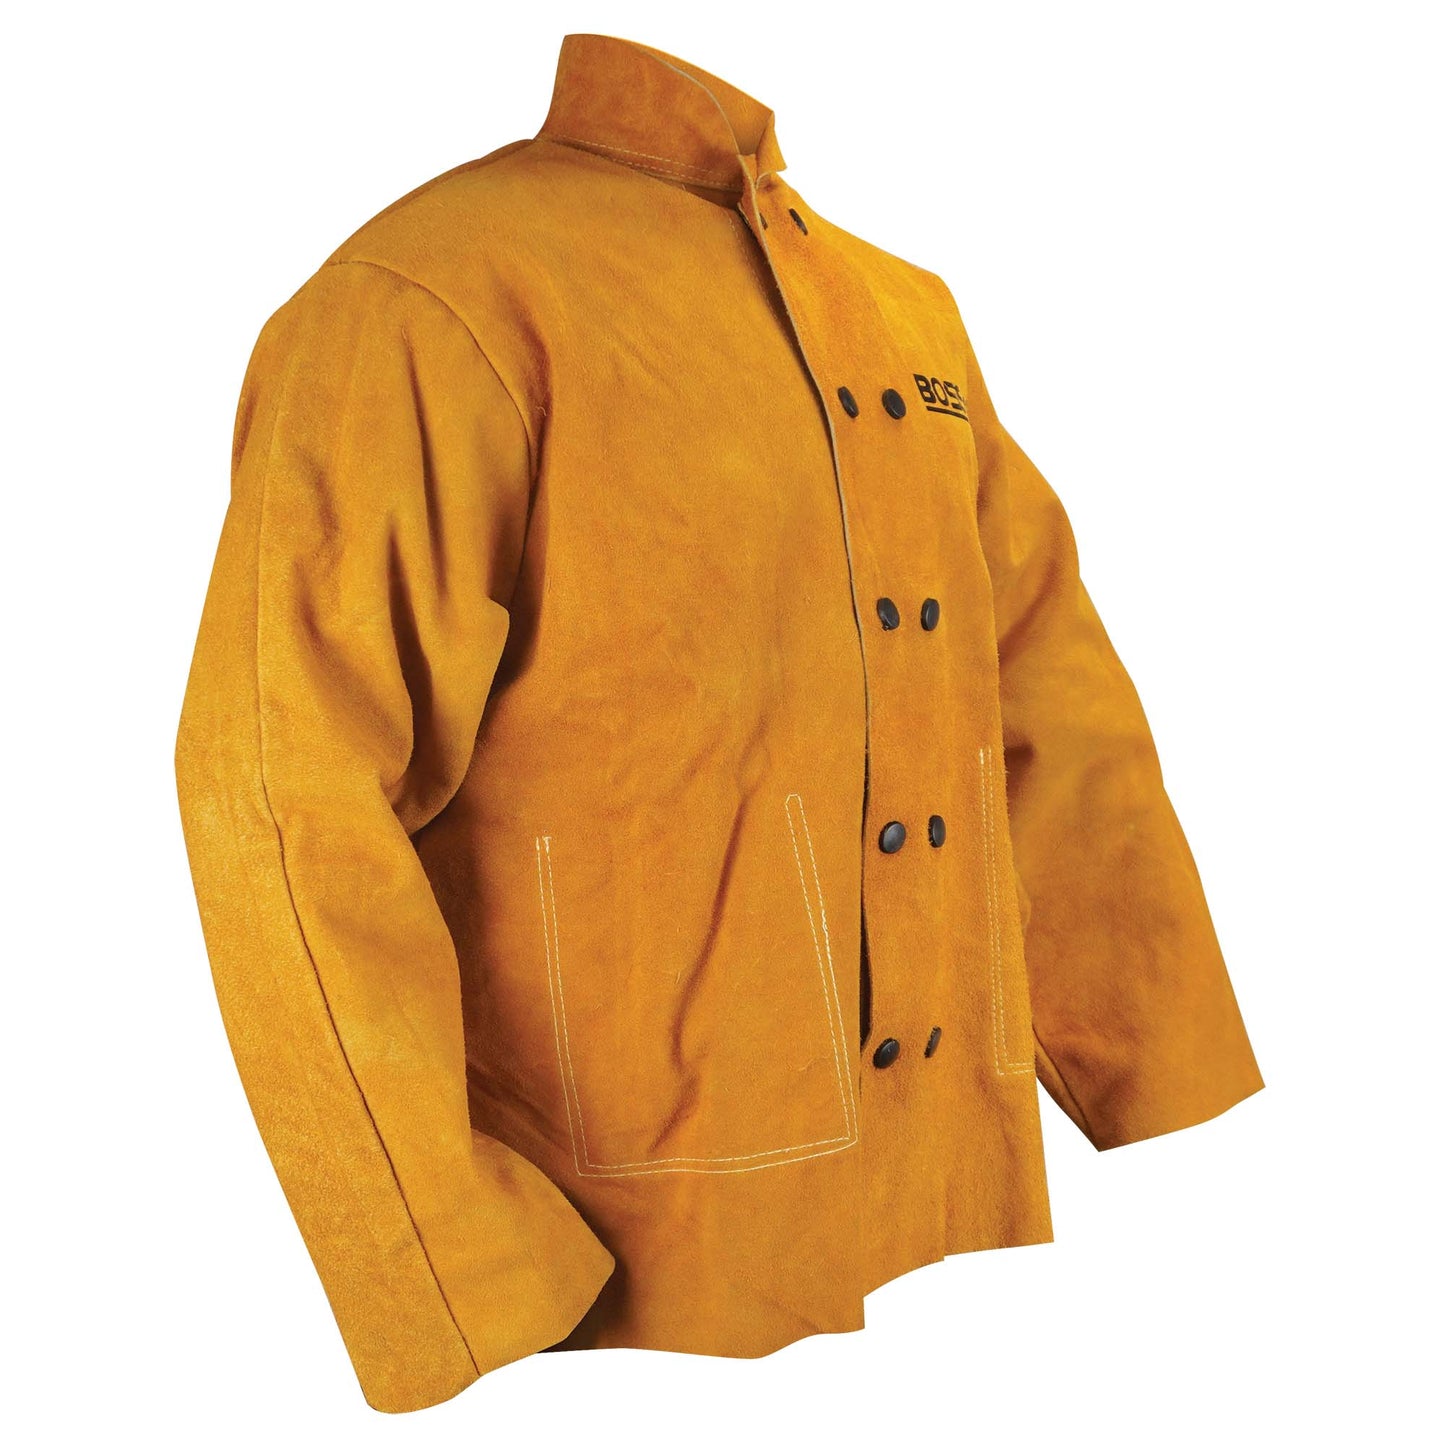 BossSafe Leather Welder's Jacket